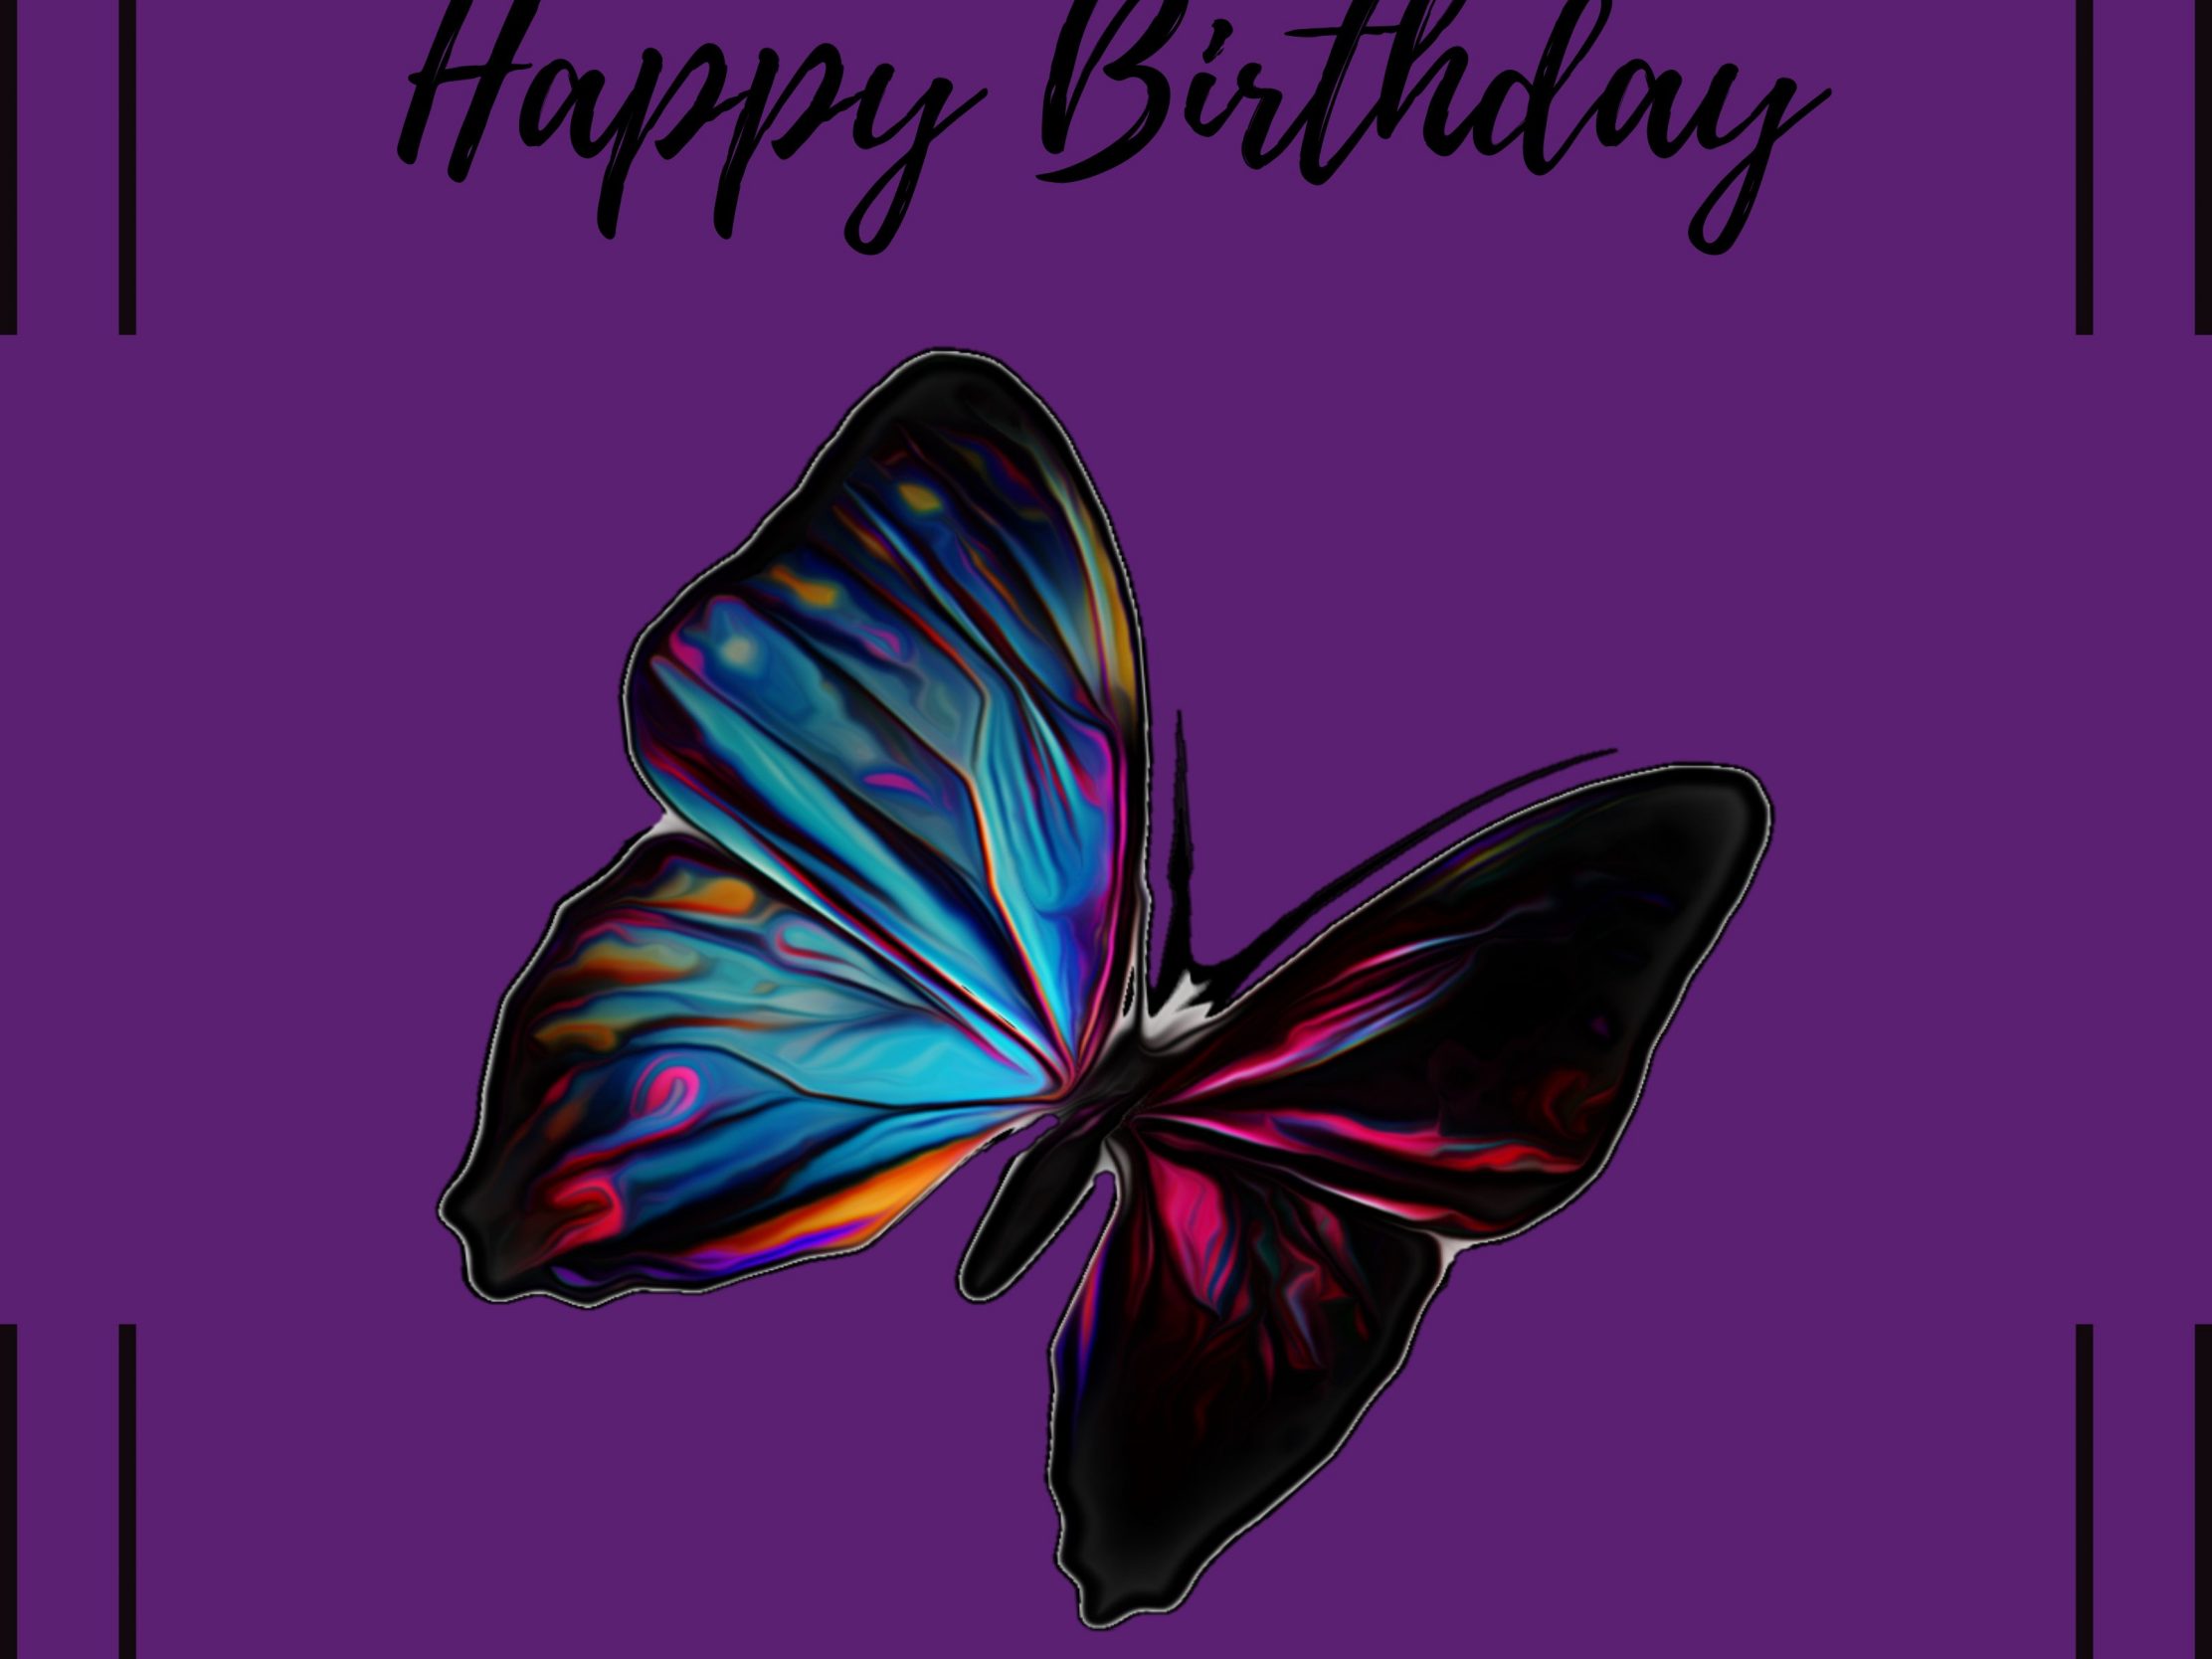 2224x1668 iPad Pro wallpapers Happy Birthday Rainbow Butterfly Ipad Wallpaper 2224x1668 pixels resolution